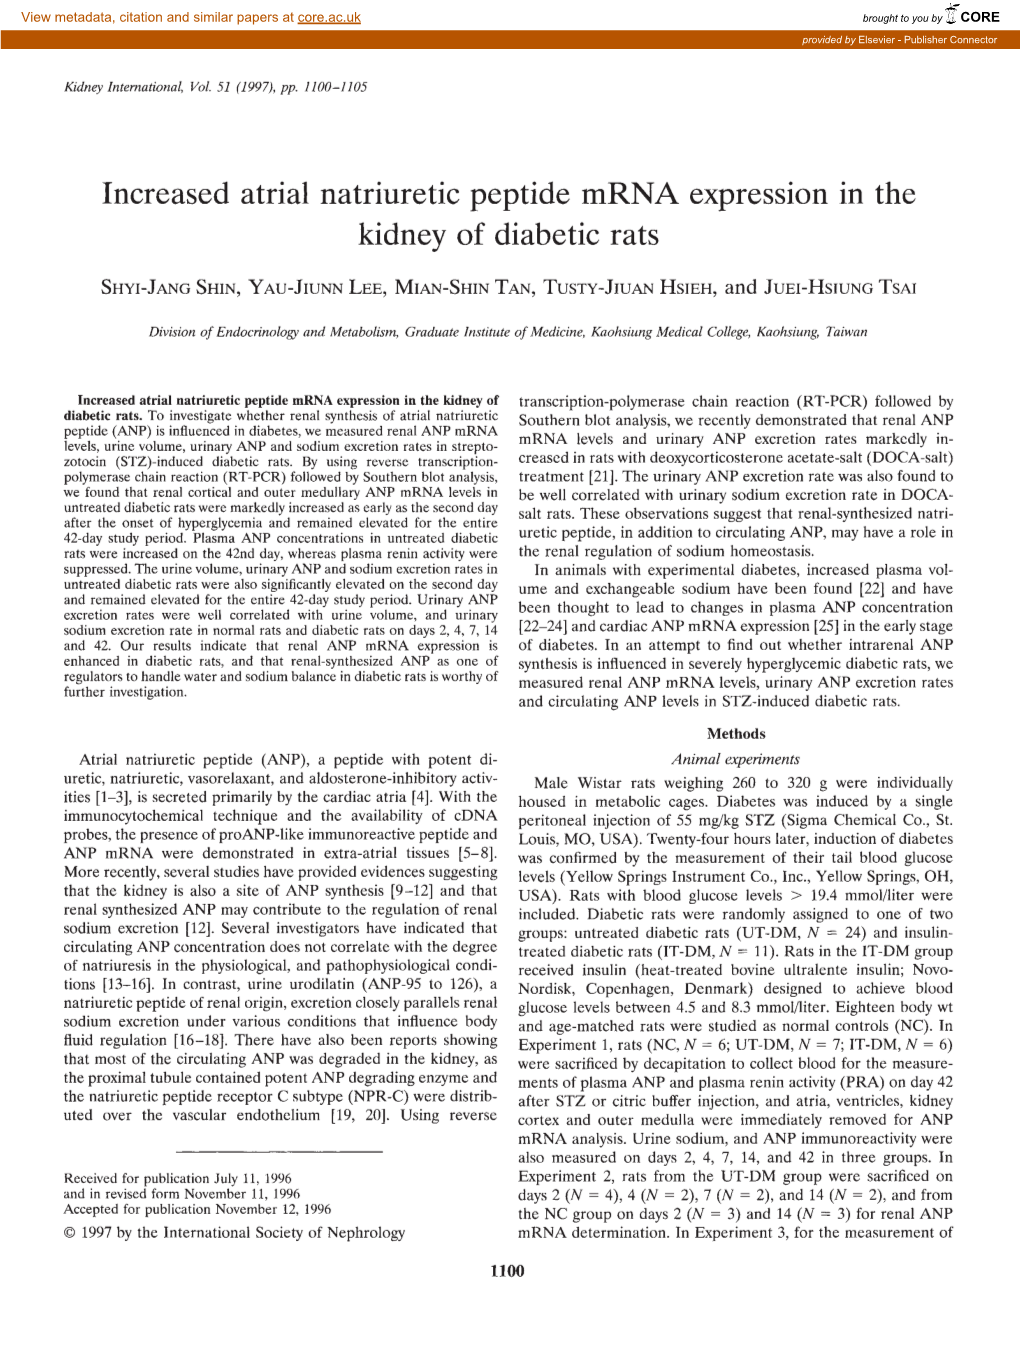 Increased Atrial Natriuretic Peptide Mrna Expression in the Kidney of Diabetic Rats